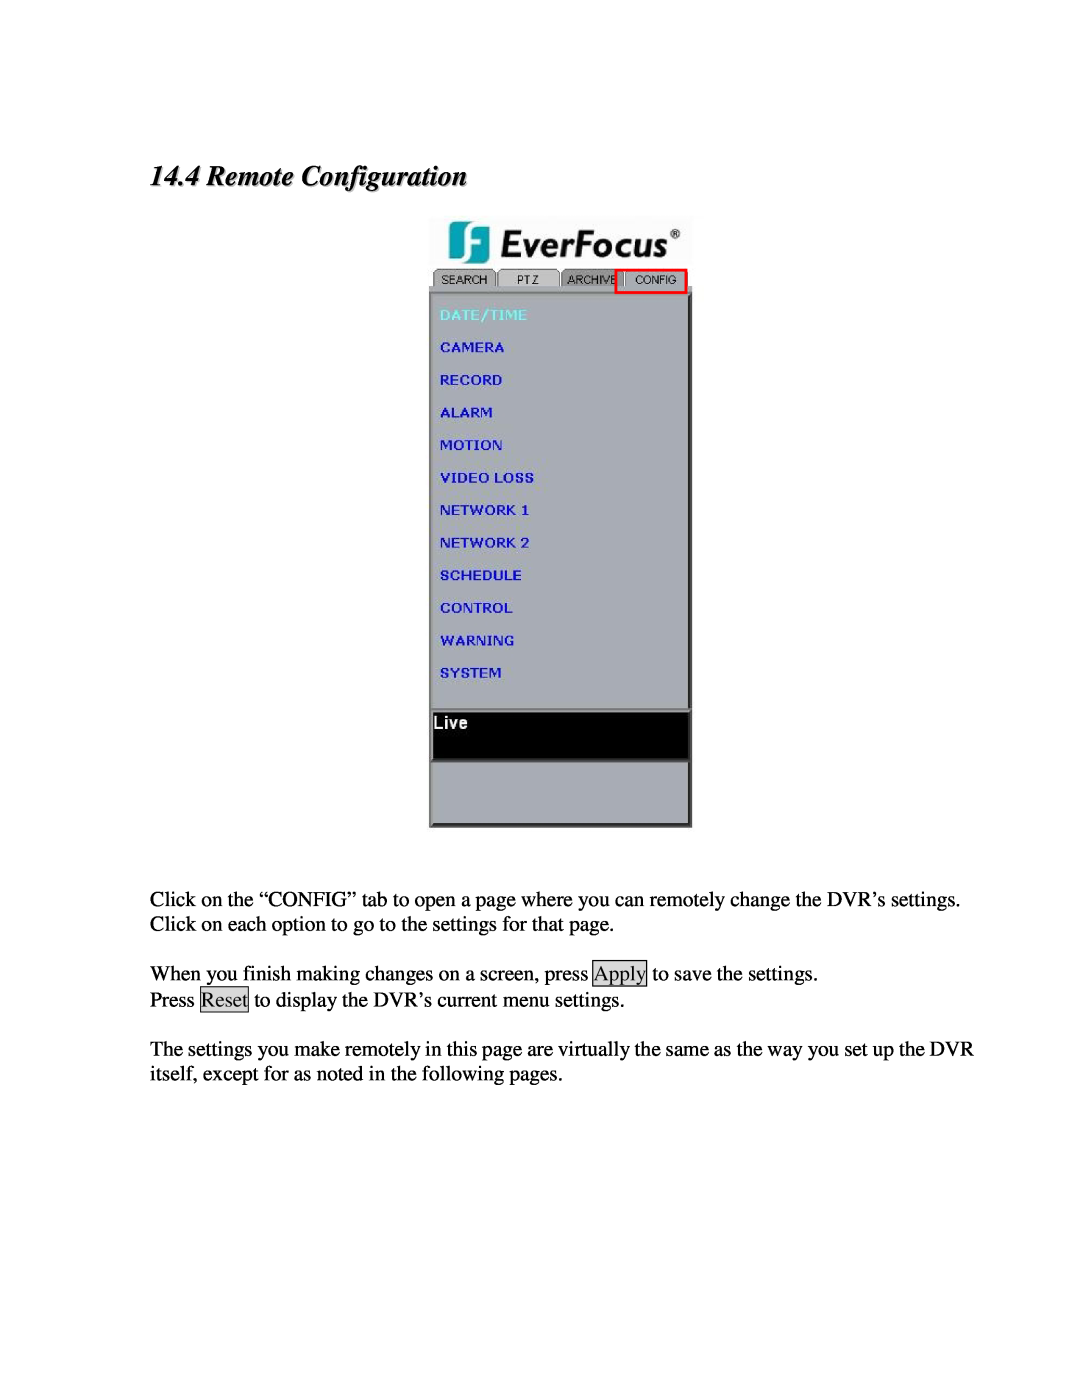 EverFocus EDR410M, EDR810H, EDR410H, EDR810M instruction manual Remote Configuration 